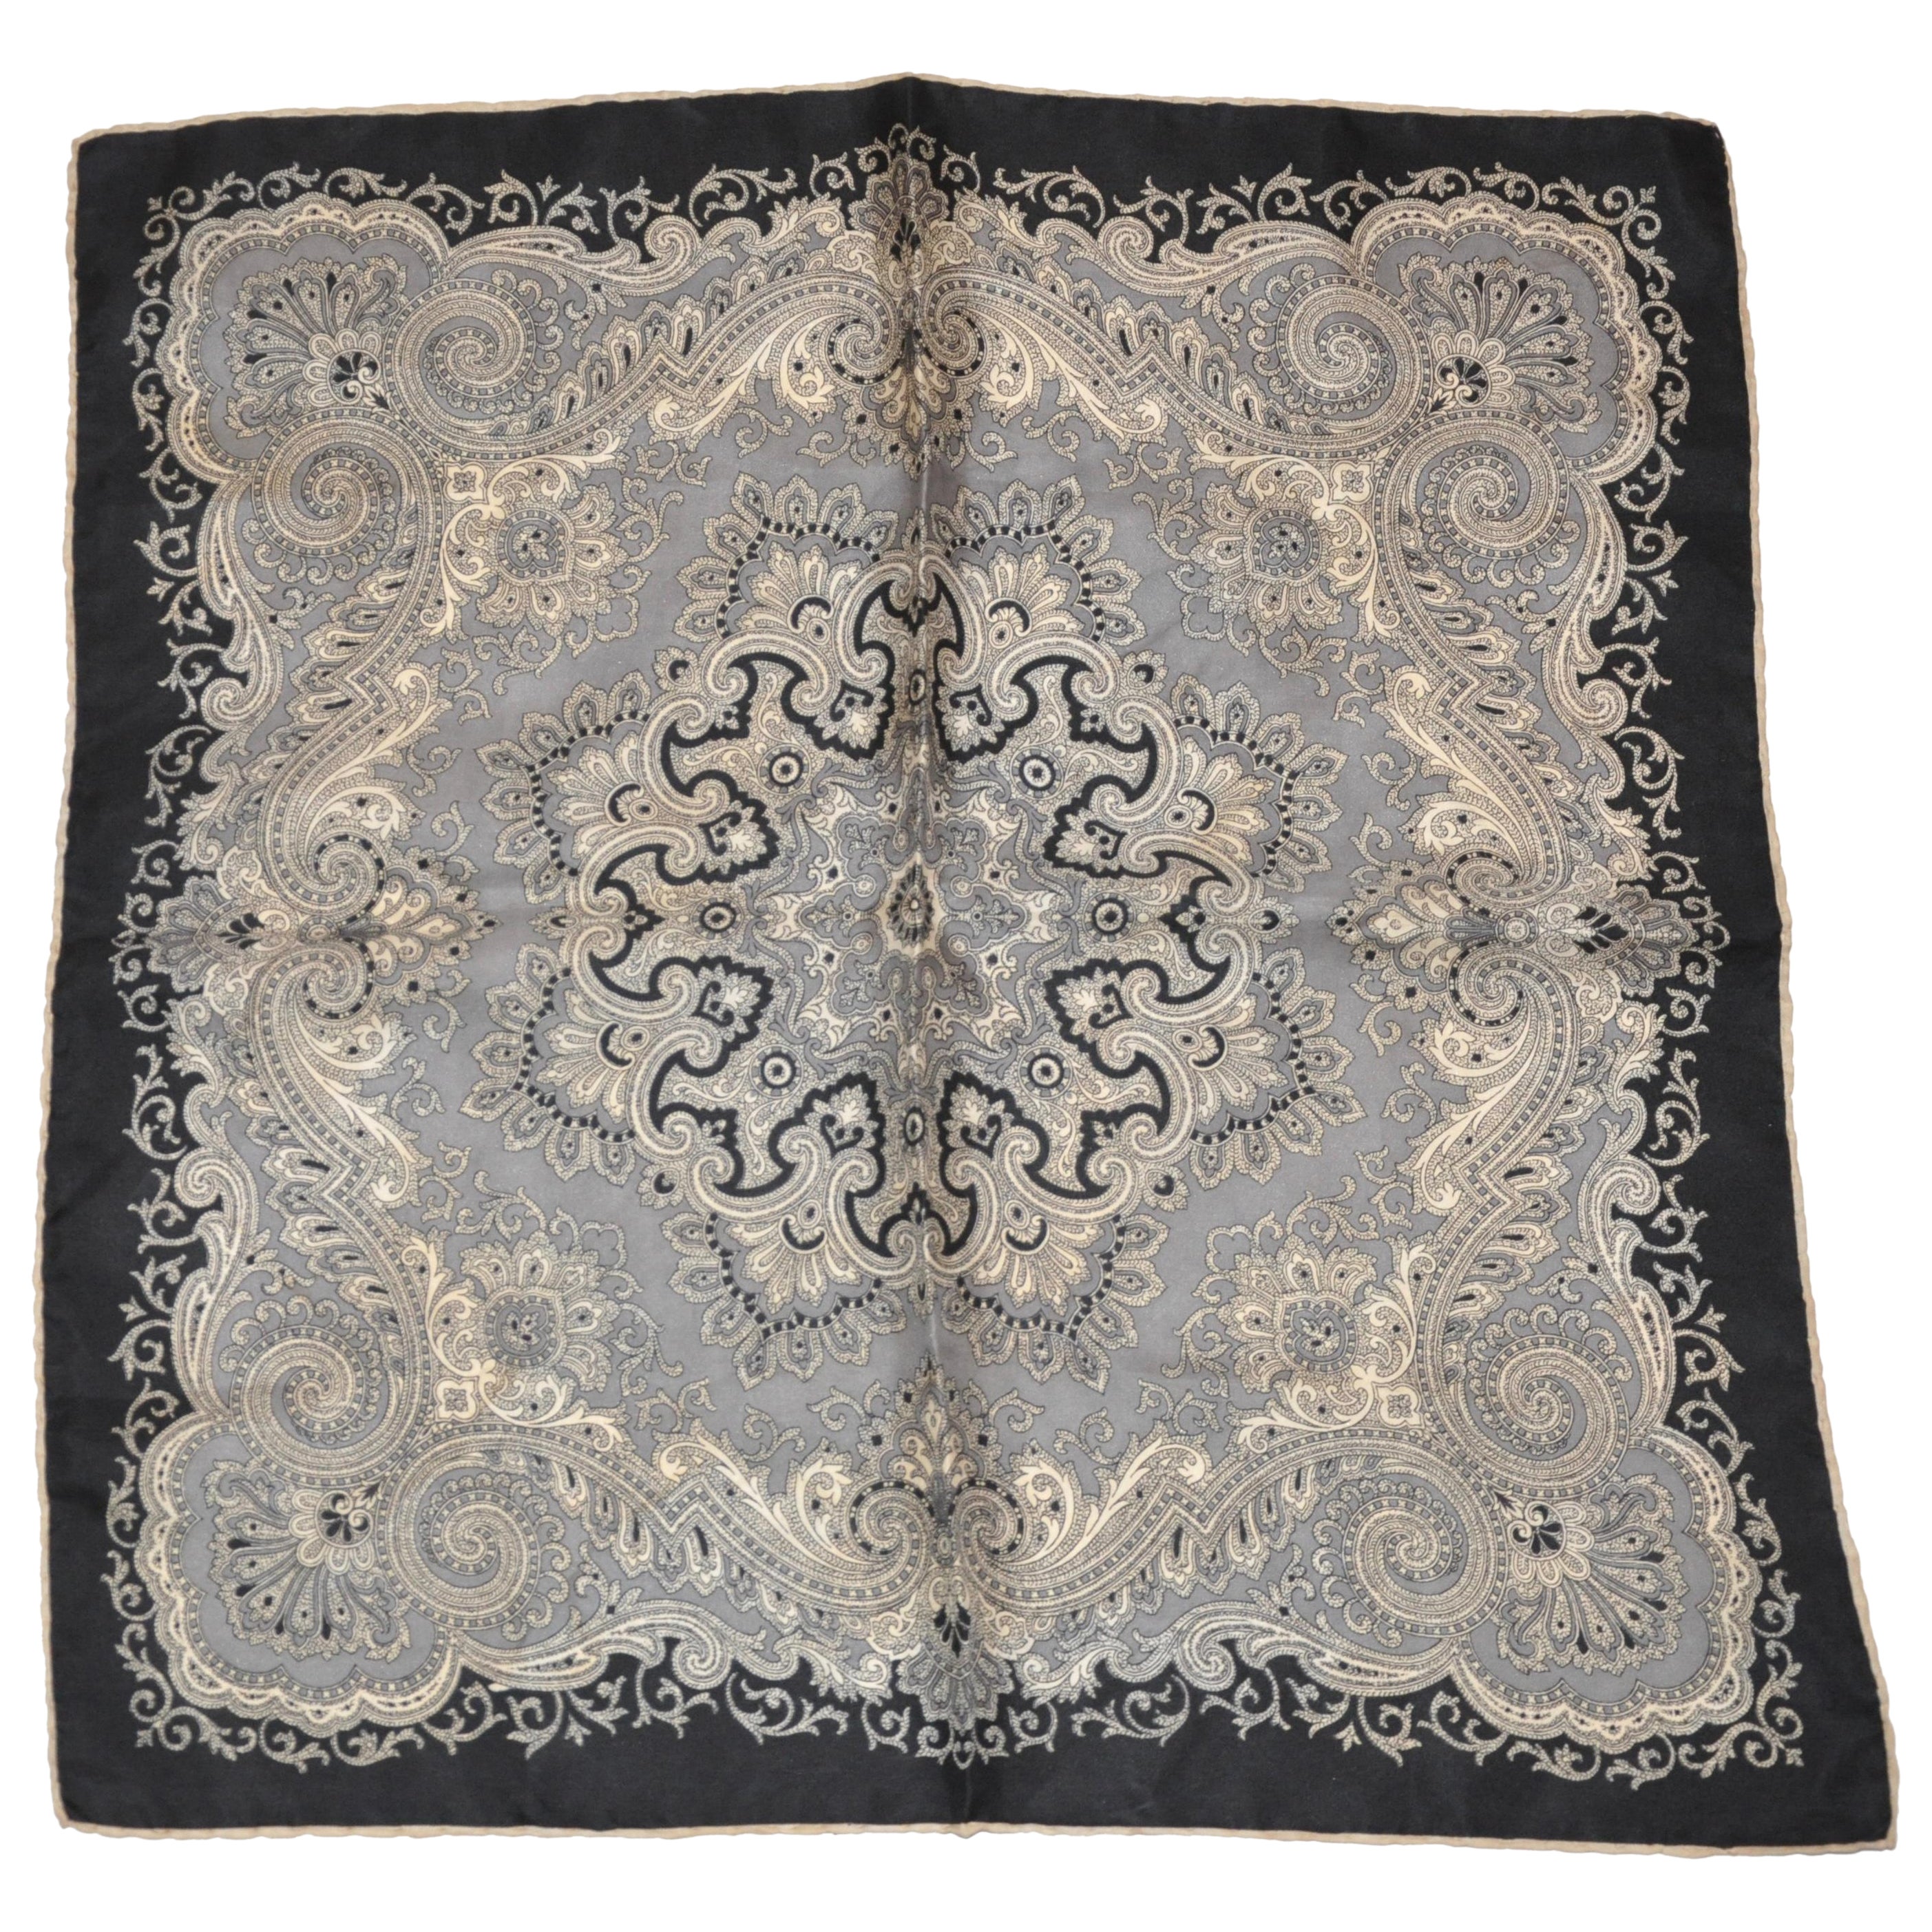 Vintage silk kimono Scarf  gray jacquard fabric with black lame border.